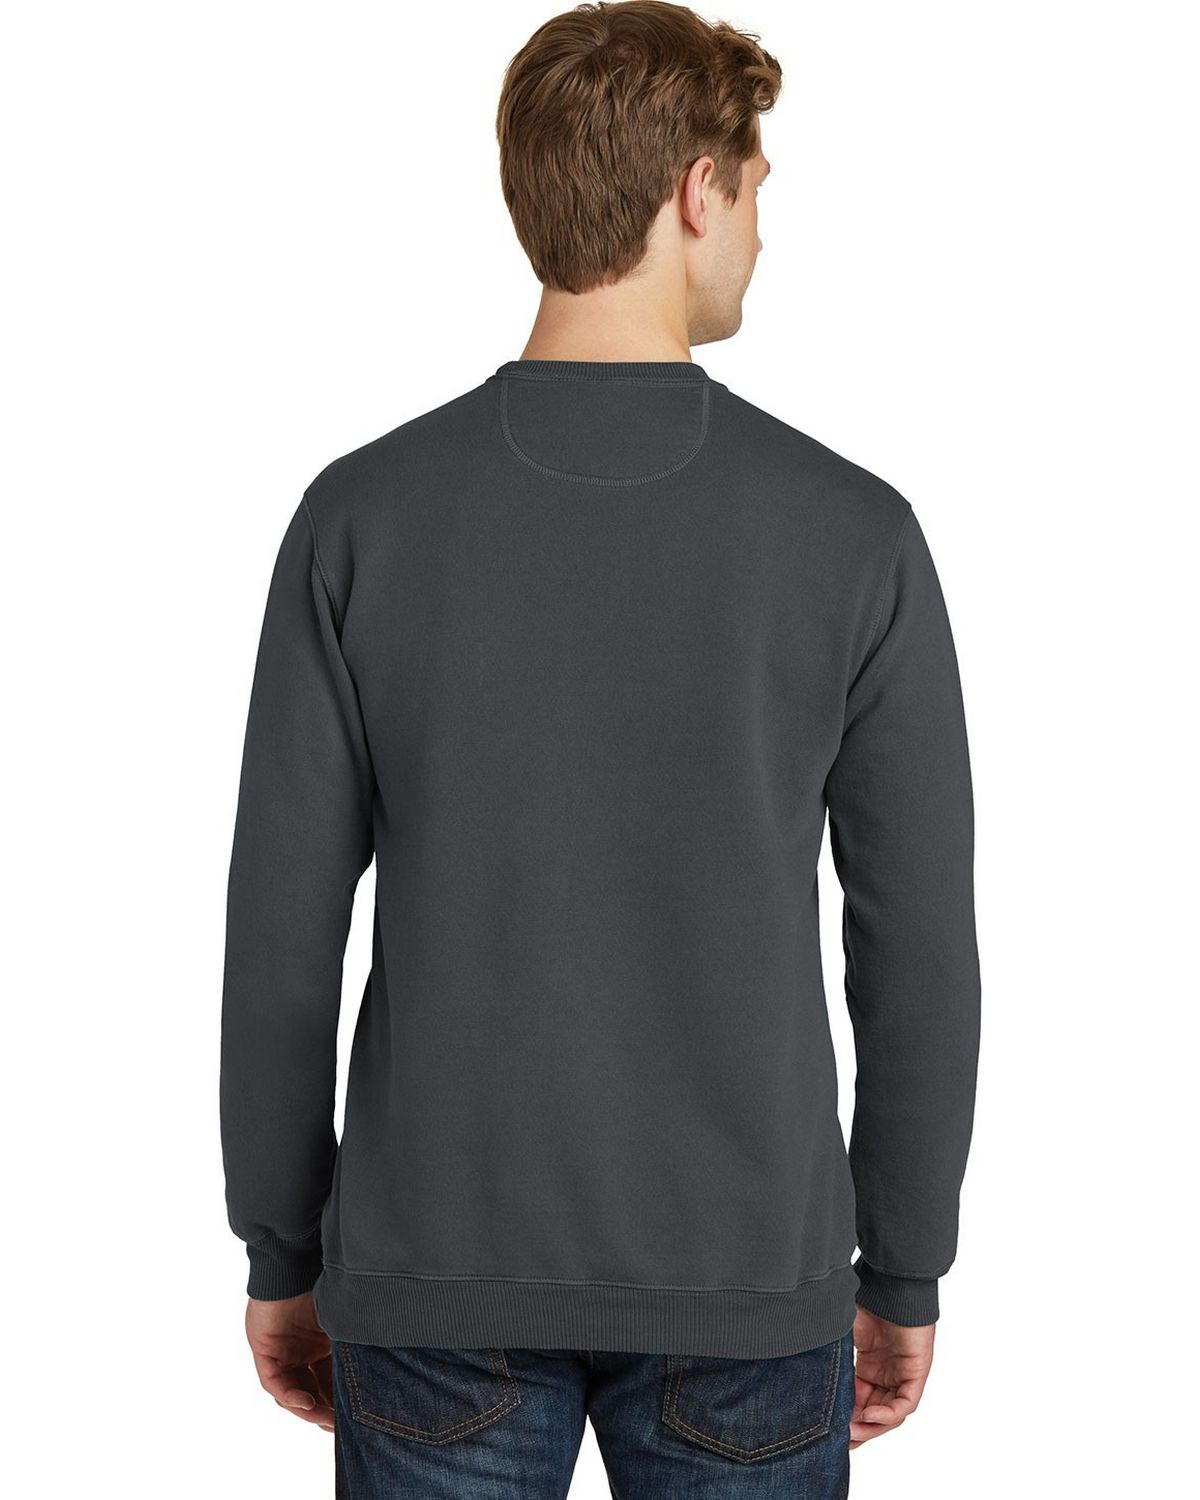 Port & Company Mens Crewneck Perfect Sweatshirt_White_L 